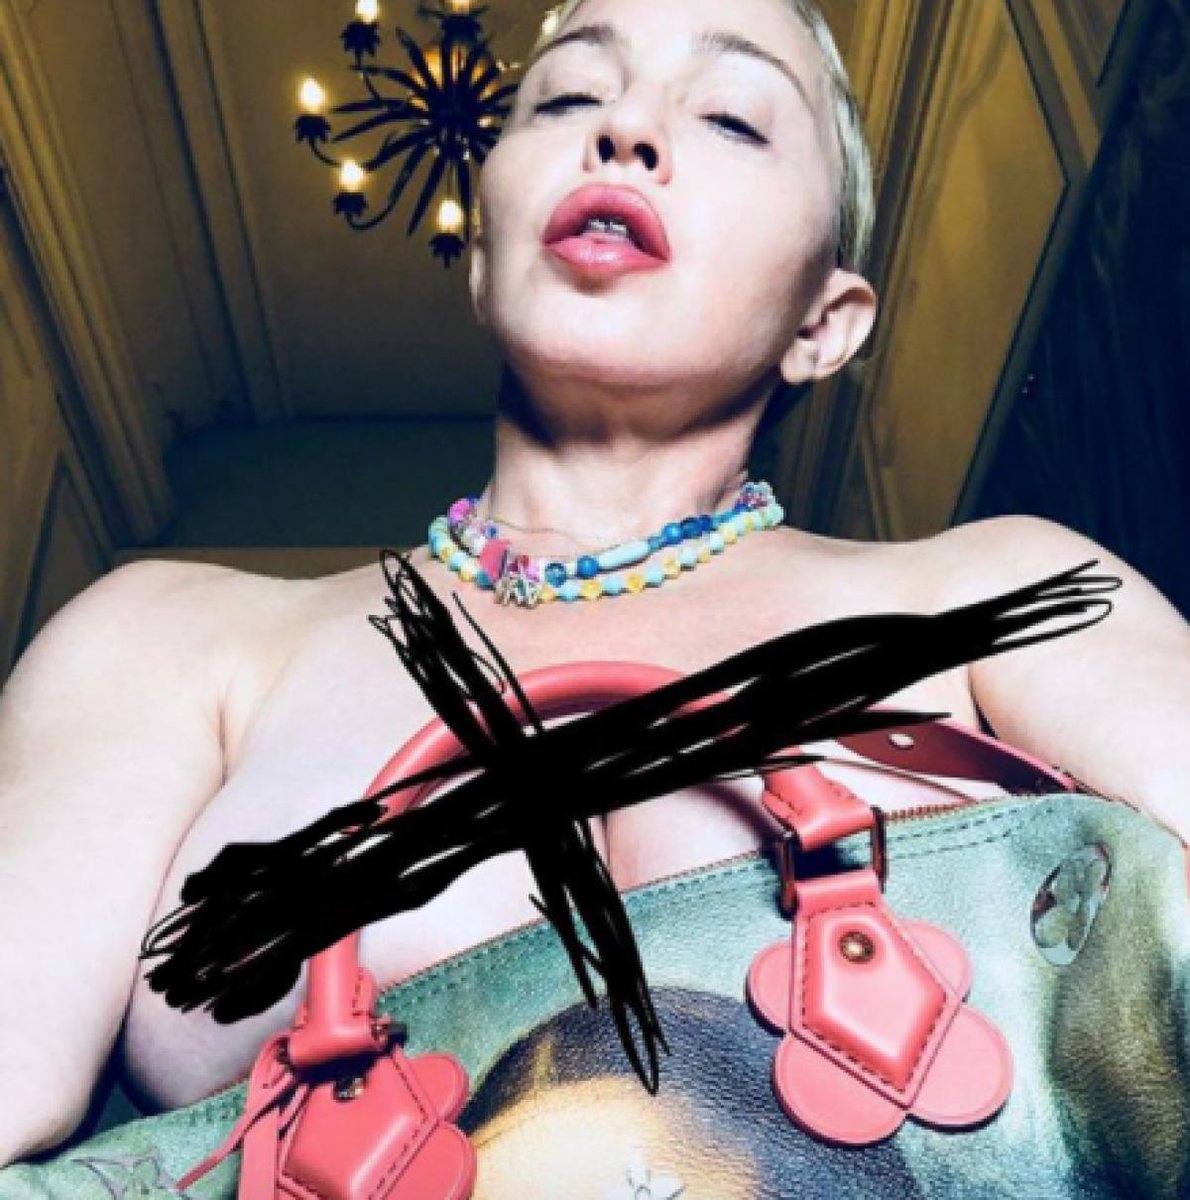 17. Honest opinion on Madonna's Instagram posts